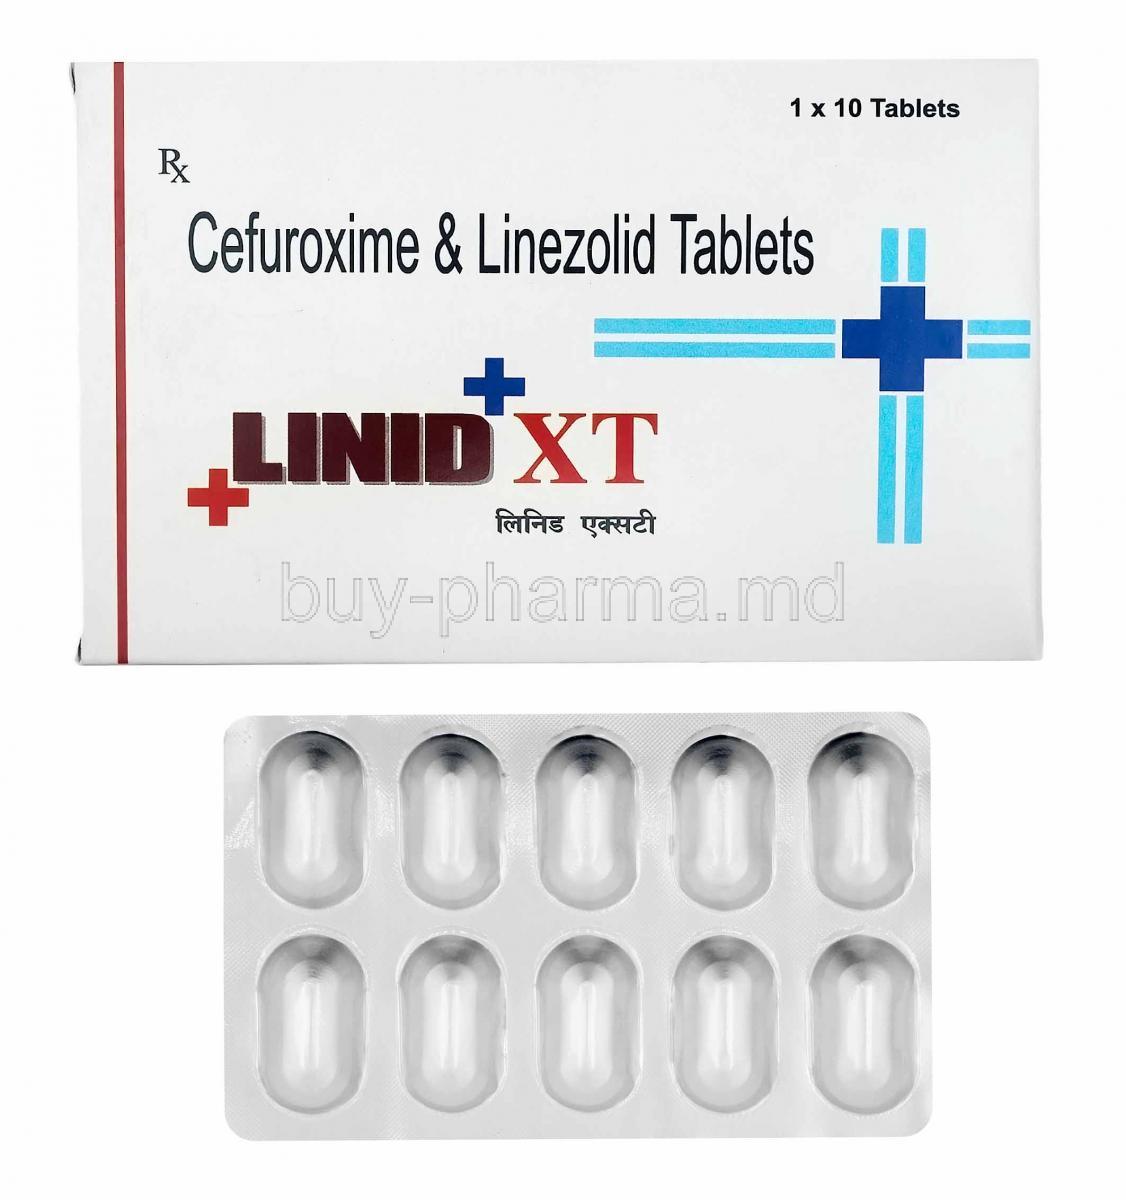 Linid XT, Voglibose, Metformin and Gliclazide box and tablets